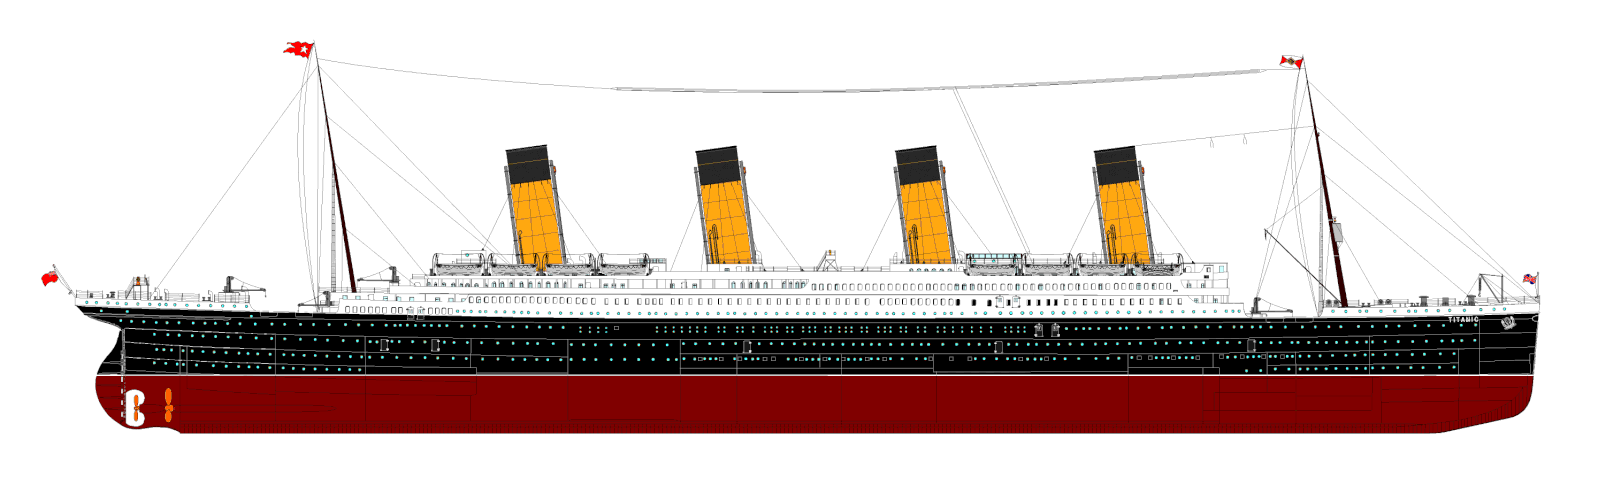 Titanic_Starboard_View_1912.gif